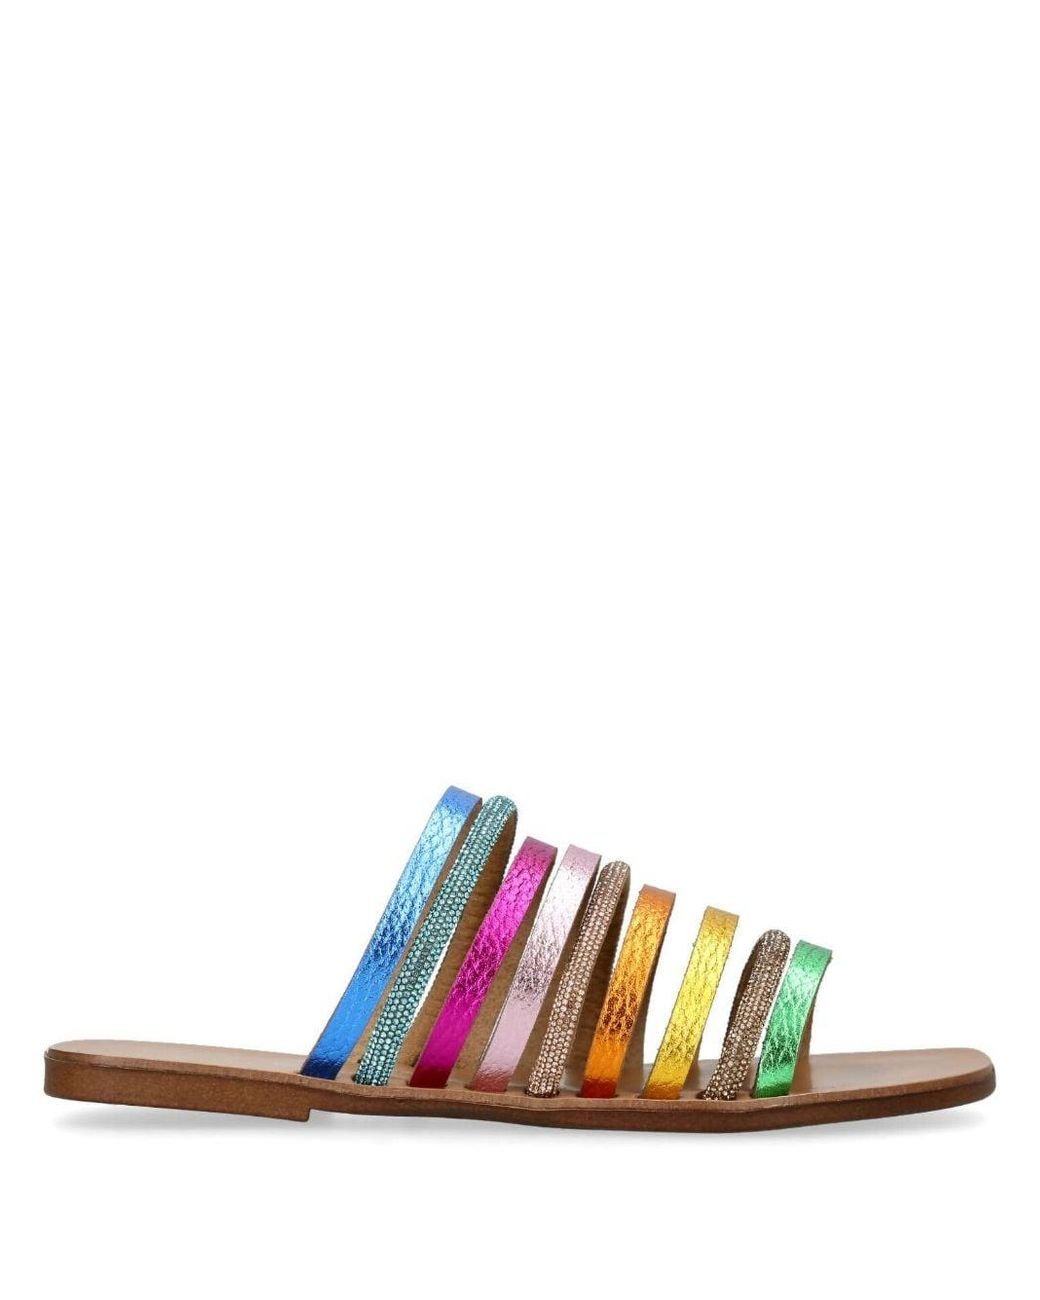 Kurt Geiger Daisy Rainbow Flat Sandals in White | Lyst